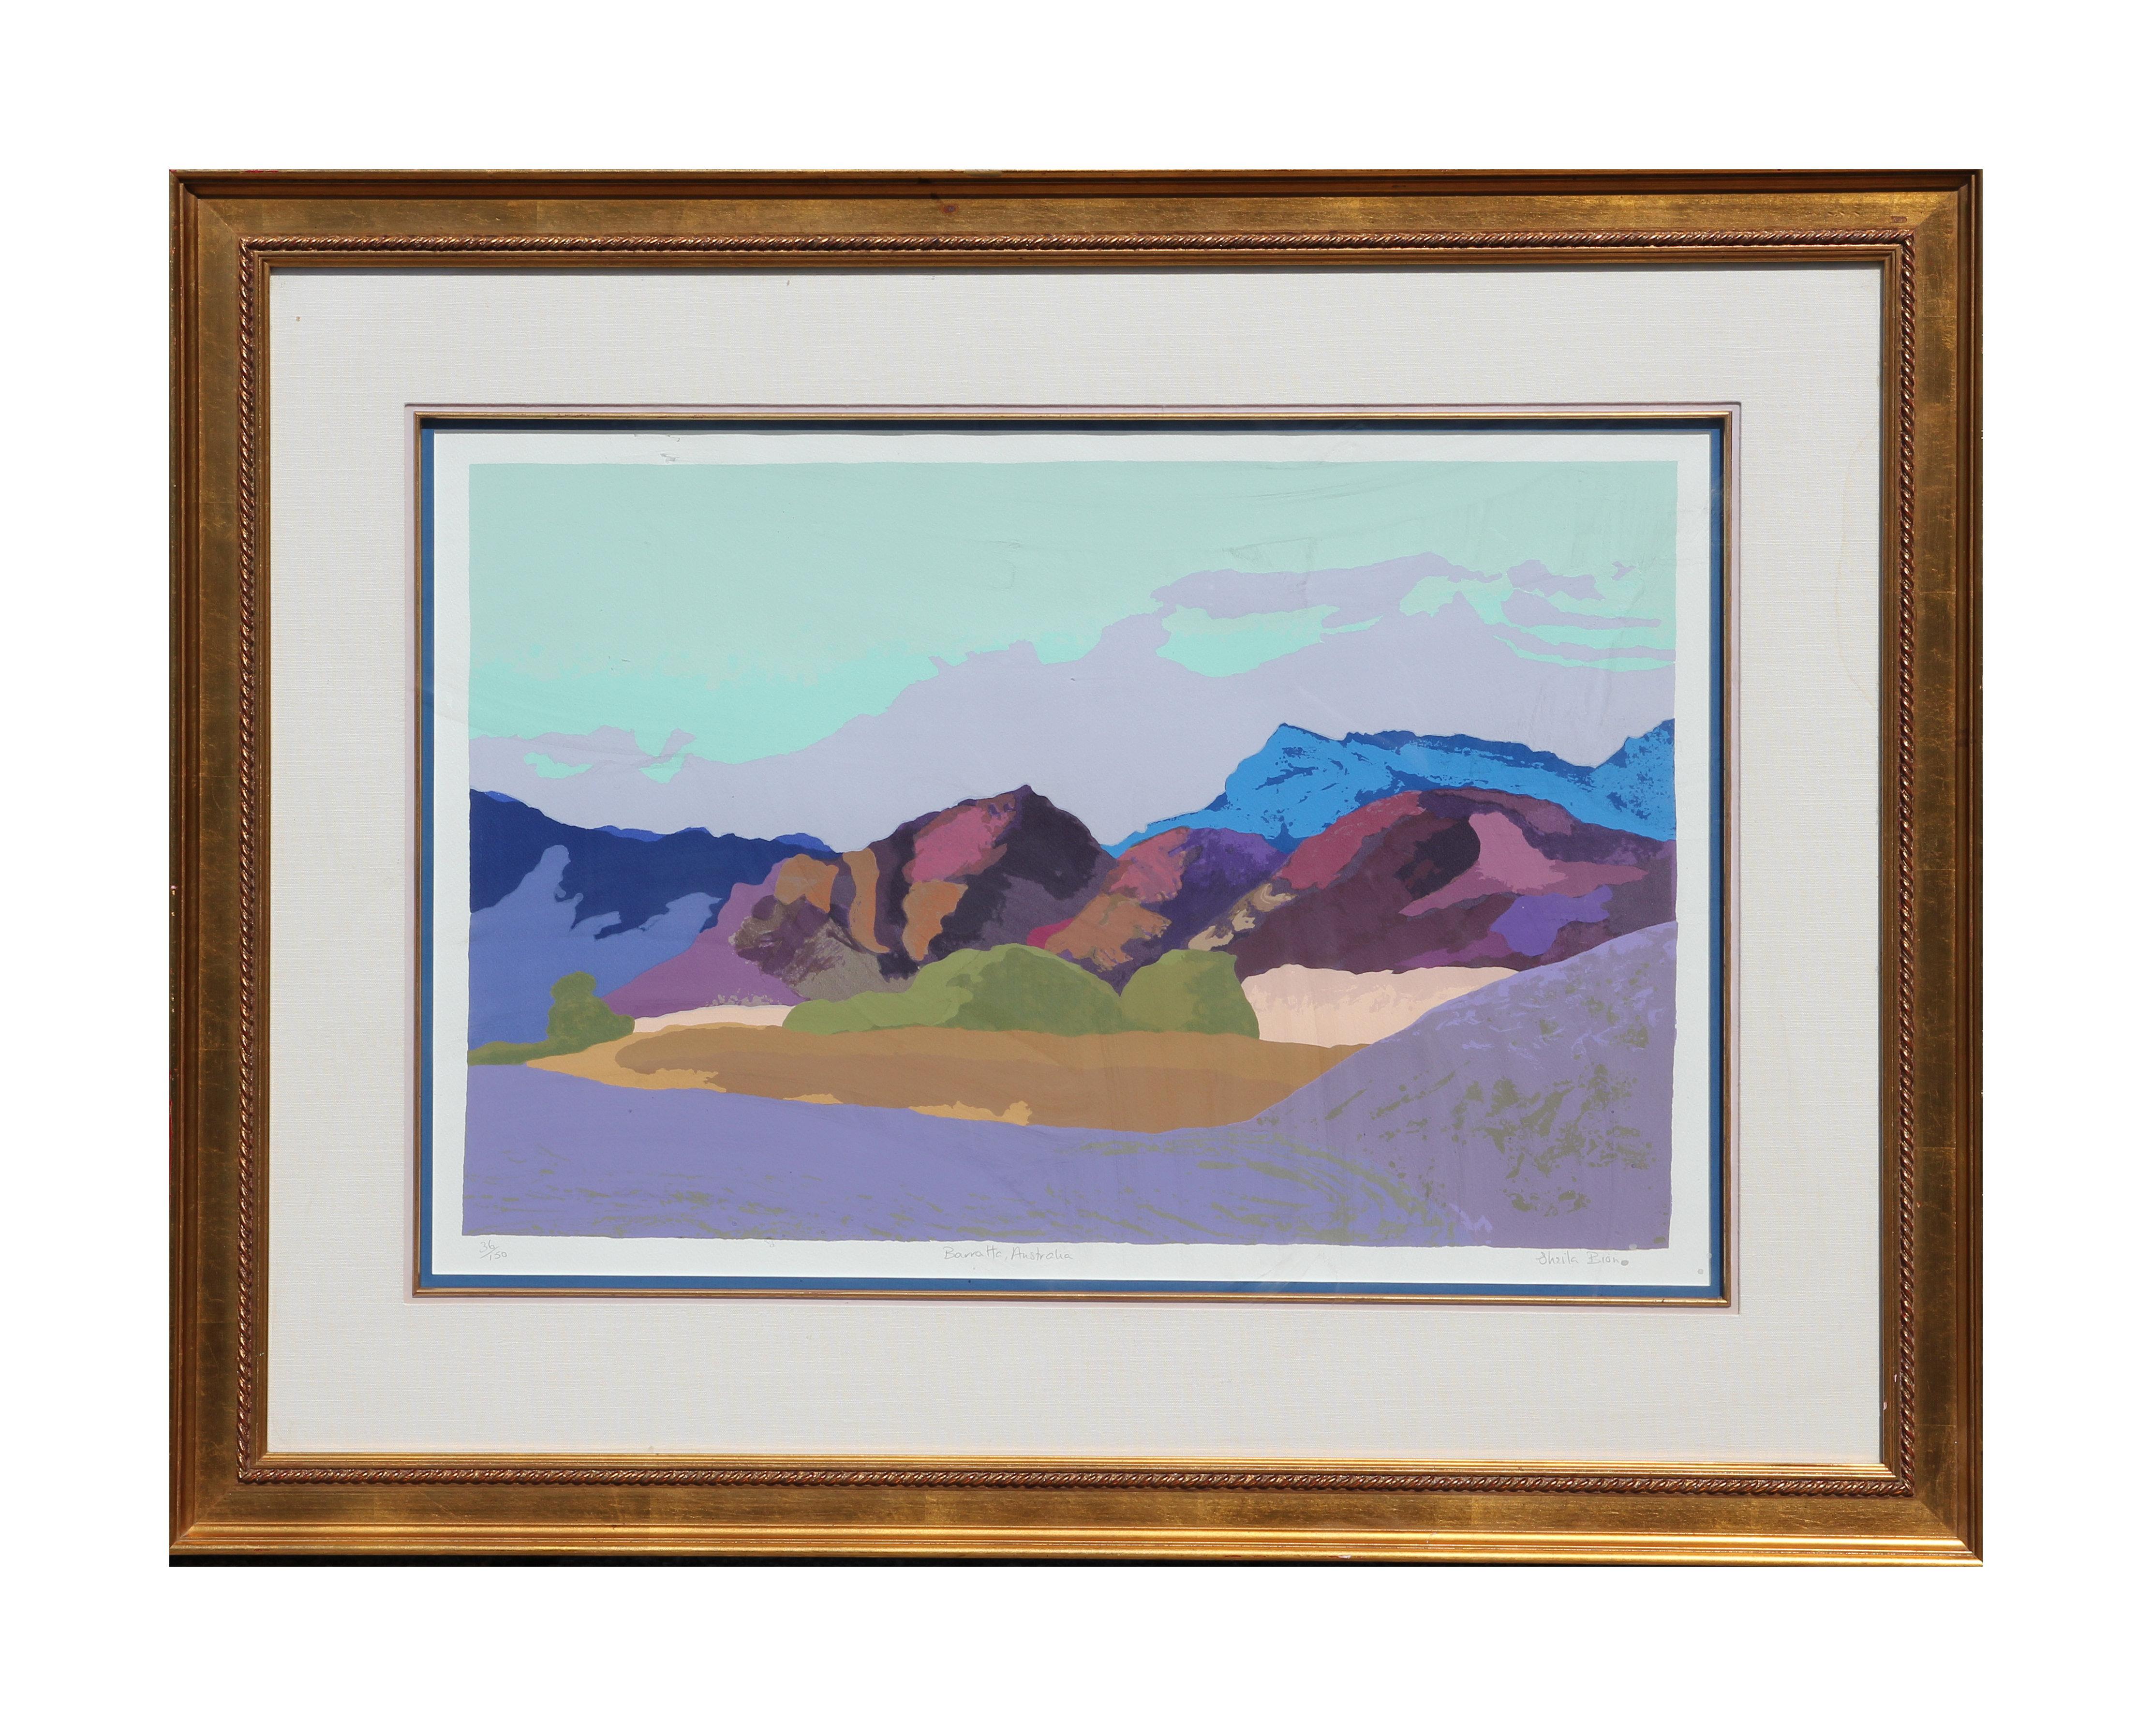 Shelia Bion Abstract Painting - "Barretta, Australia" Colorful Impressionist Desert Landscape Edition 36 of 150